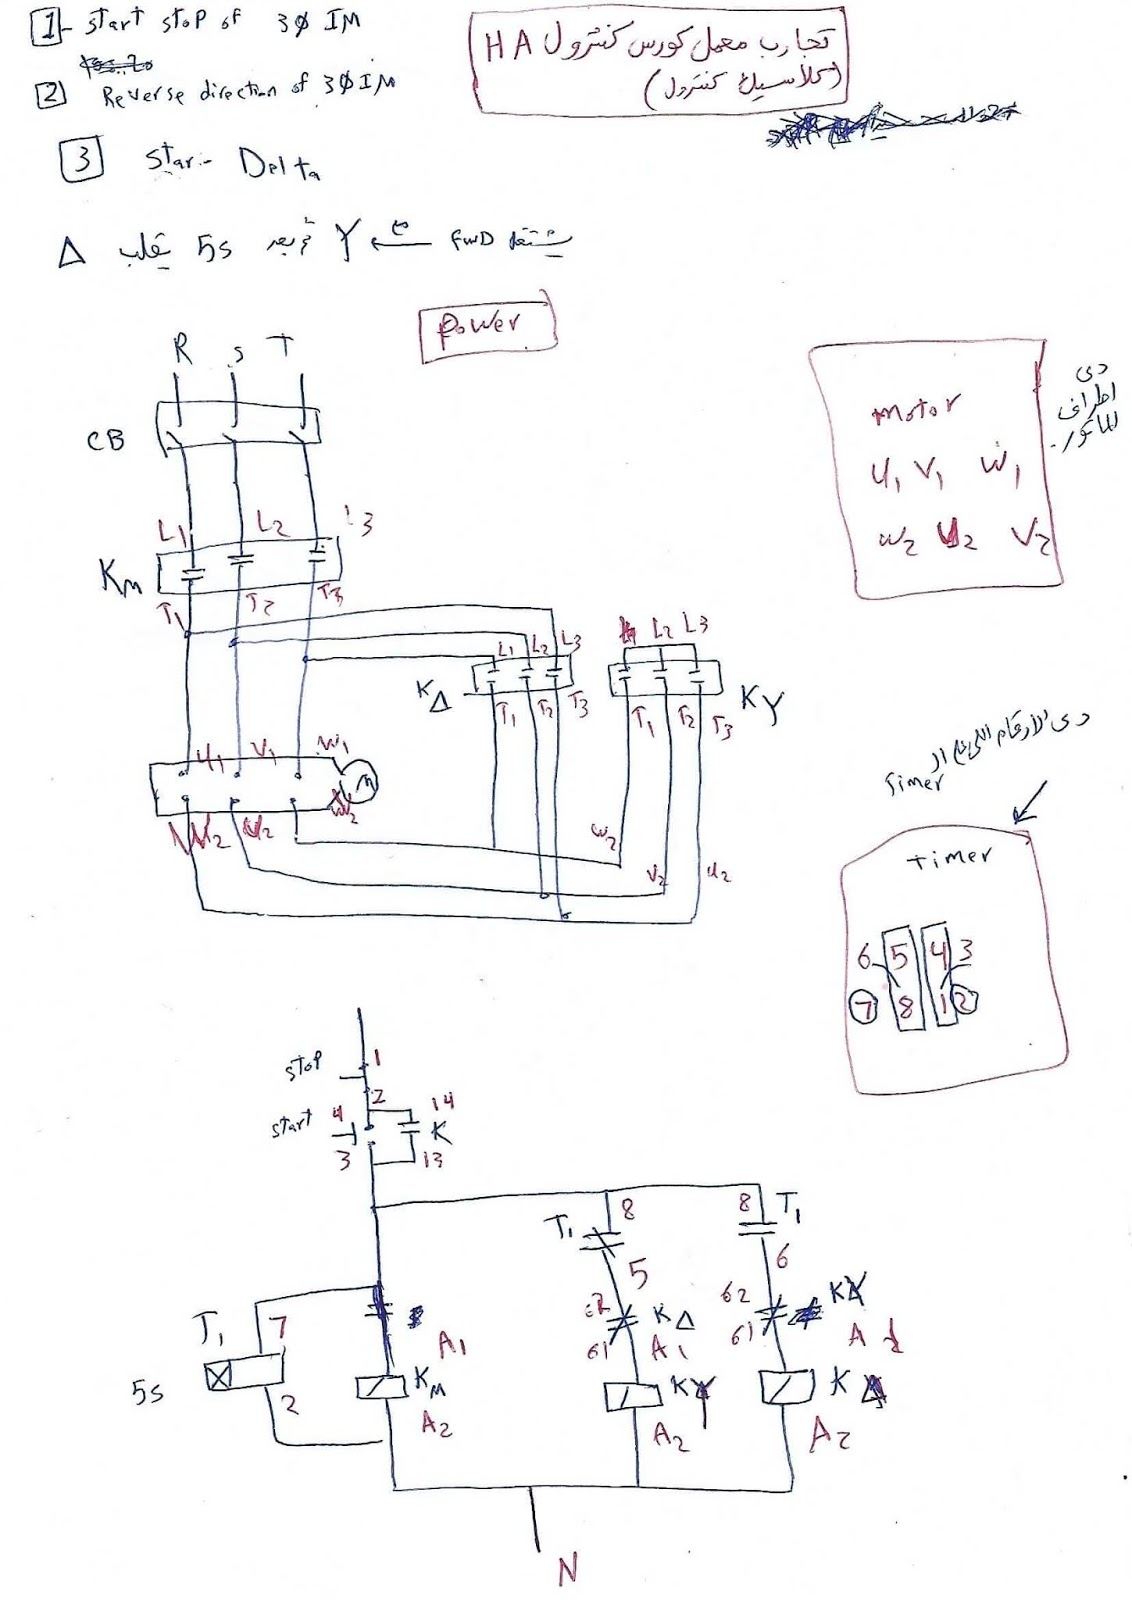 lesson 1:introduction to classic control/تعليم تصميم دوائر التحكم  الكهربائية 